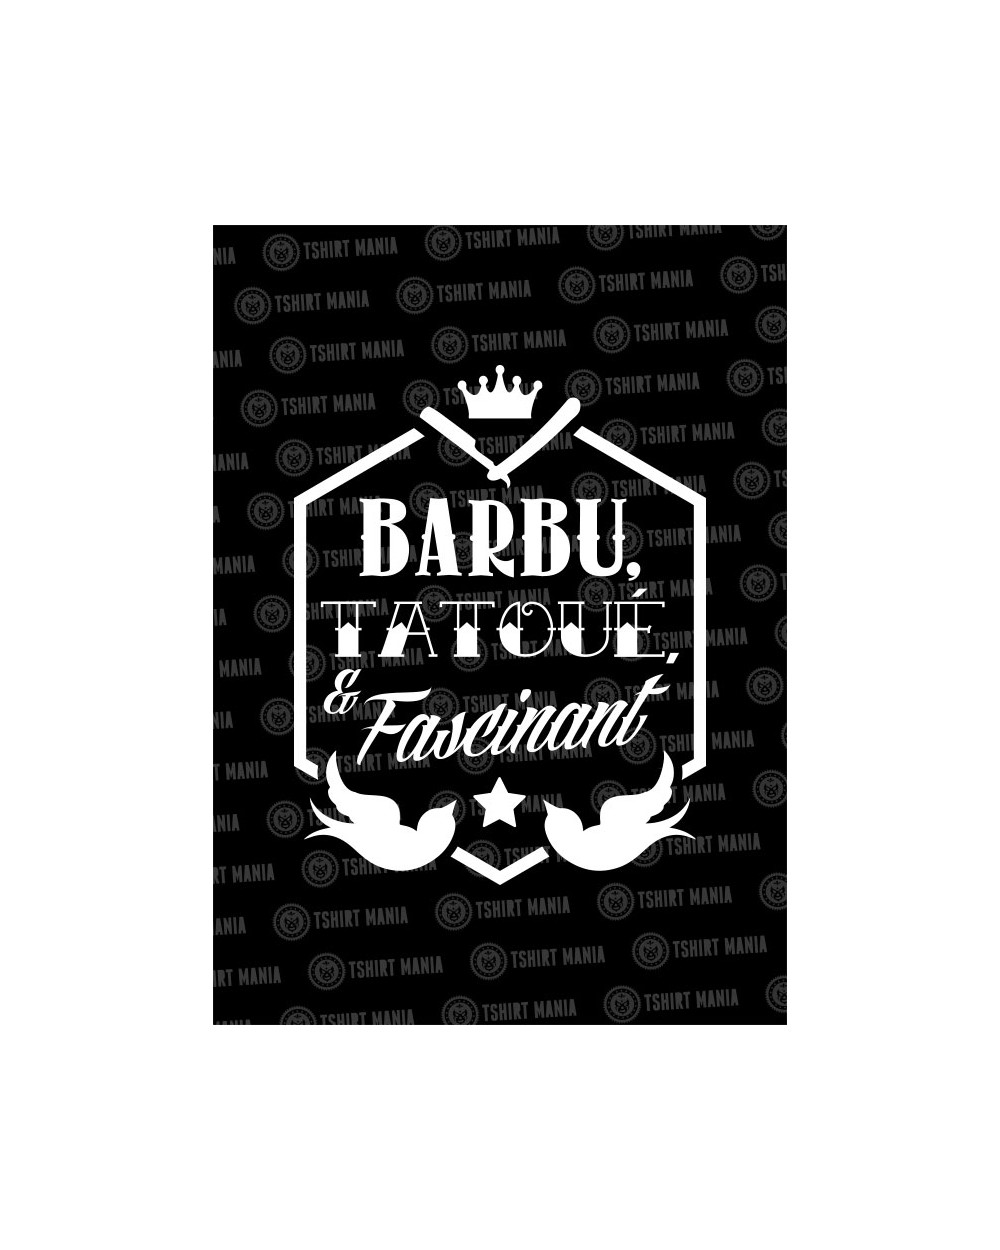 Barbu, tatoué et fascinant !